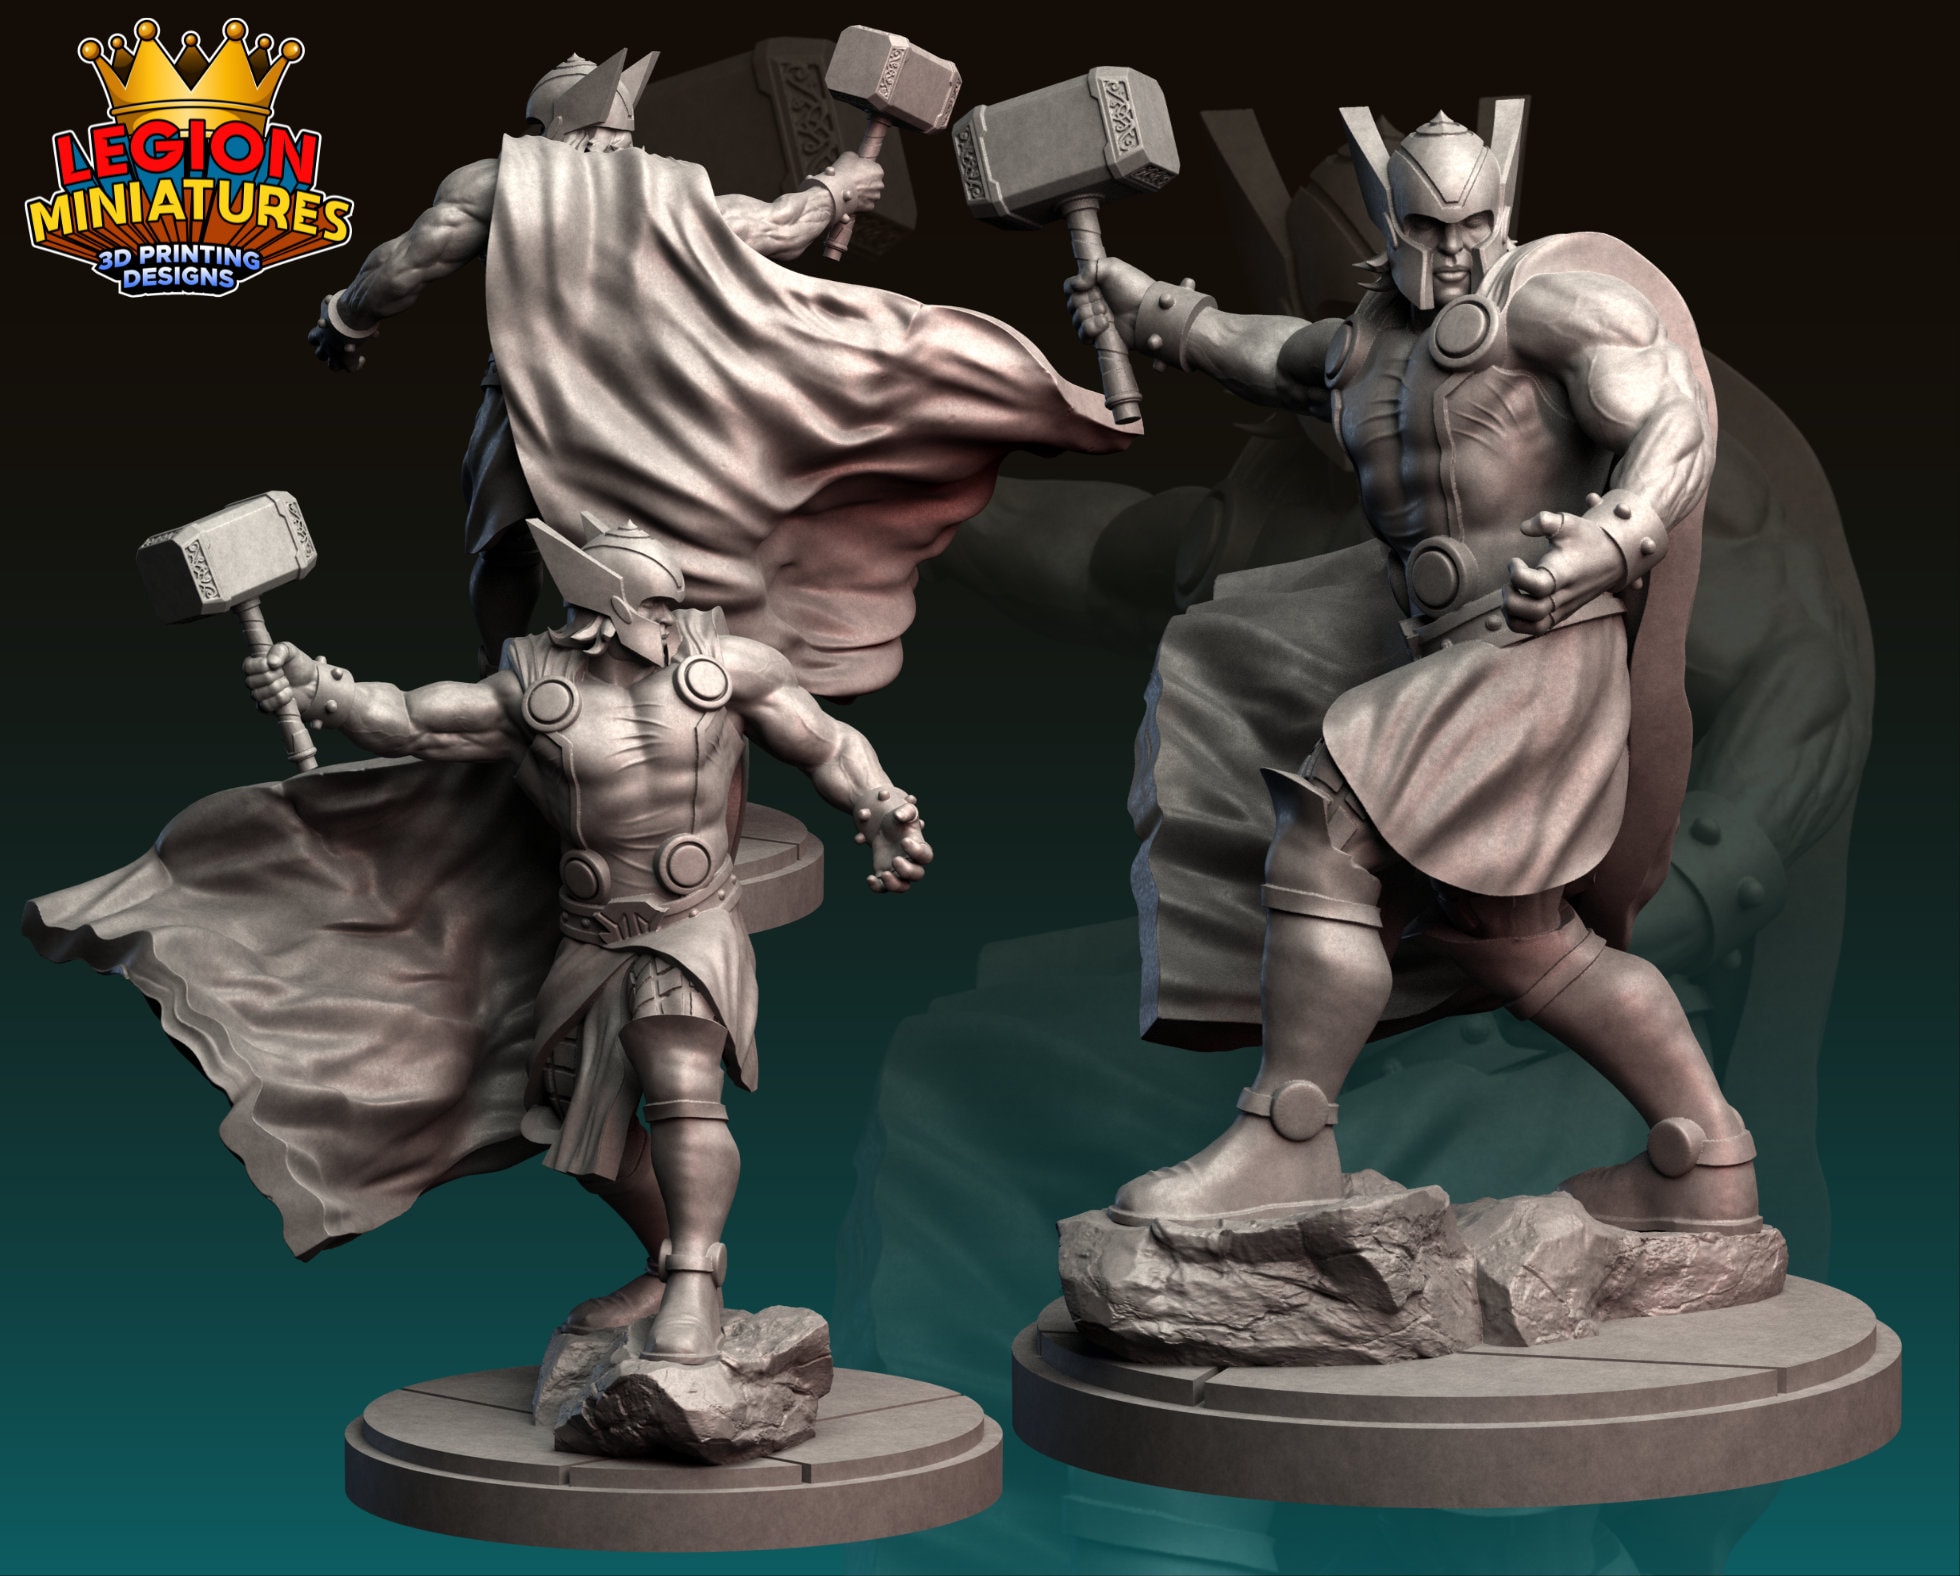 Gambody STL files of King Thor for 3D Printing